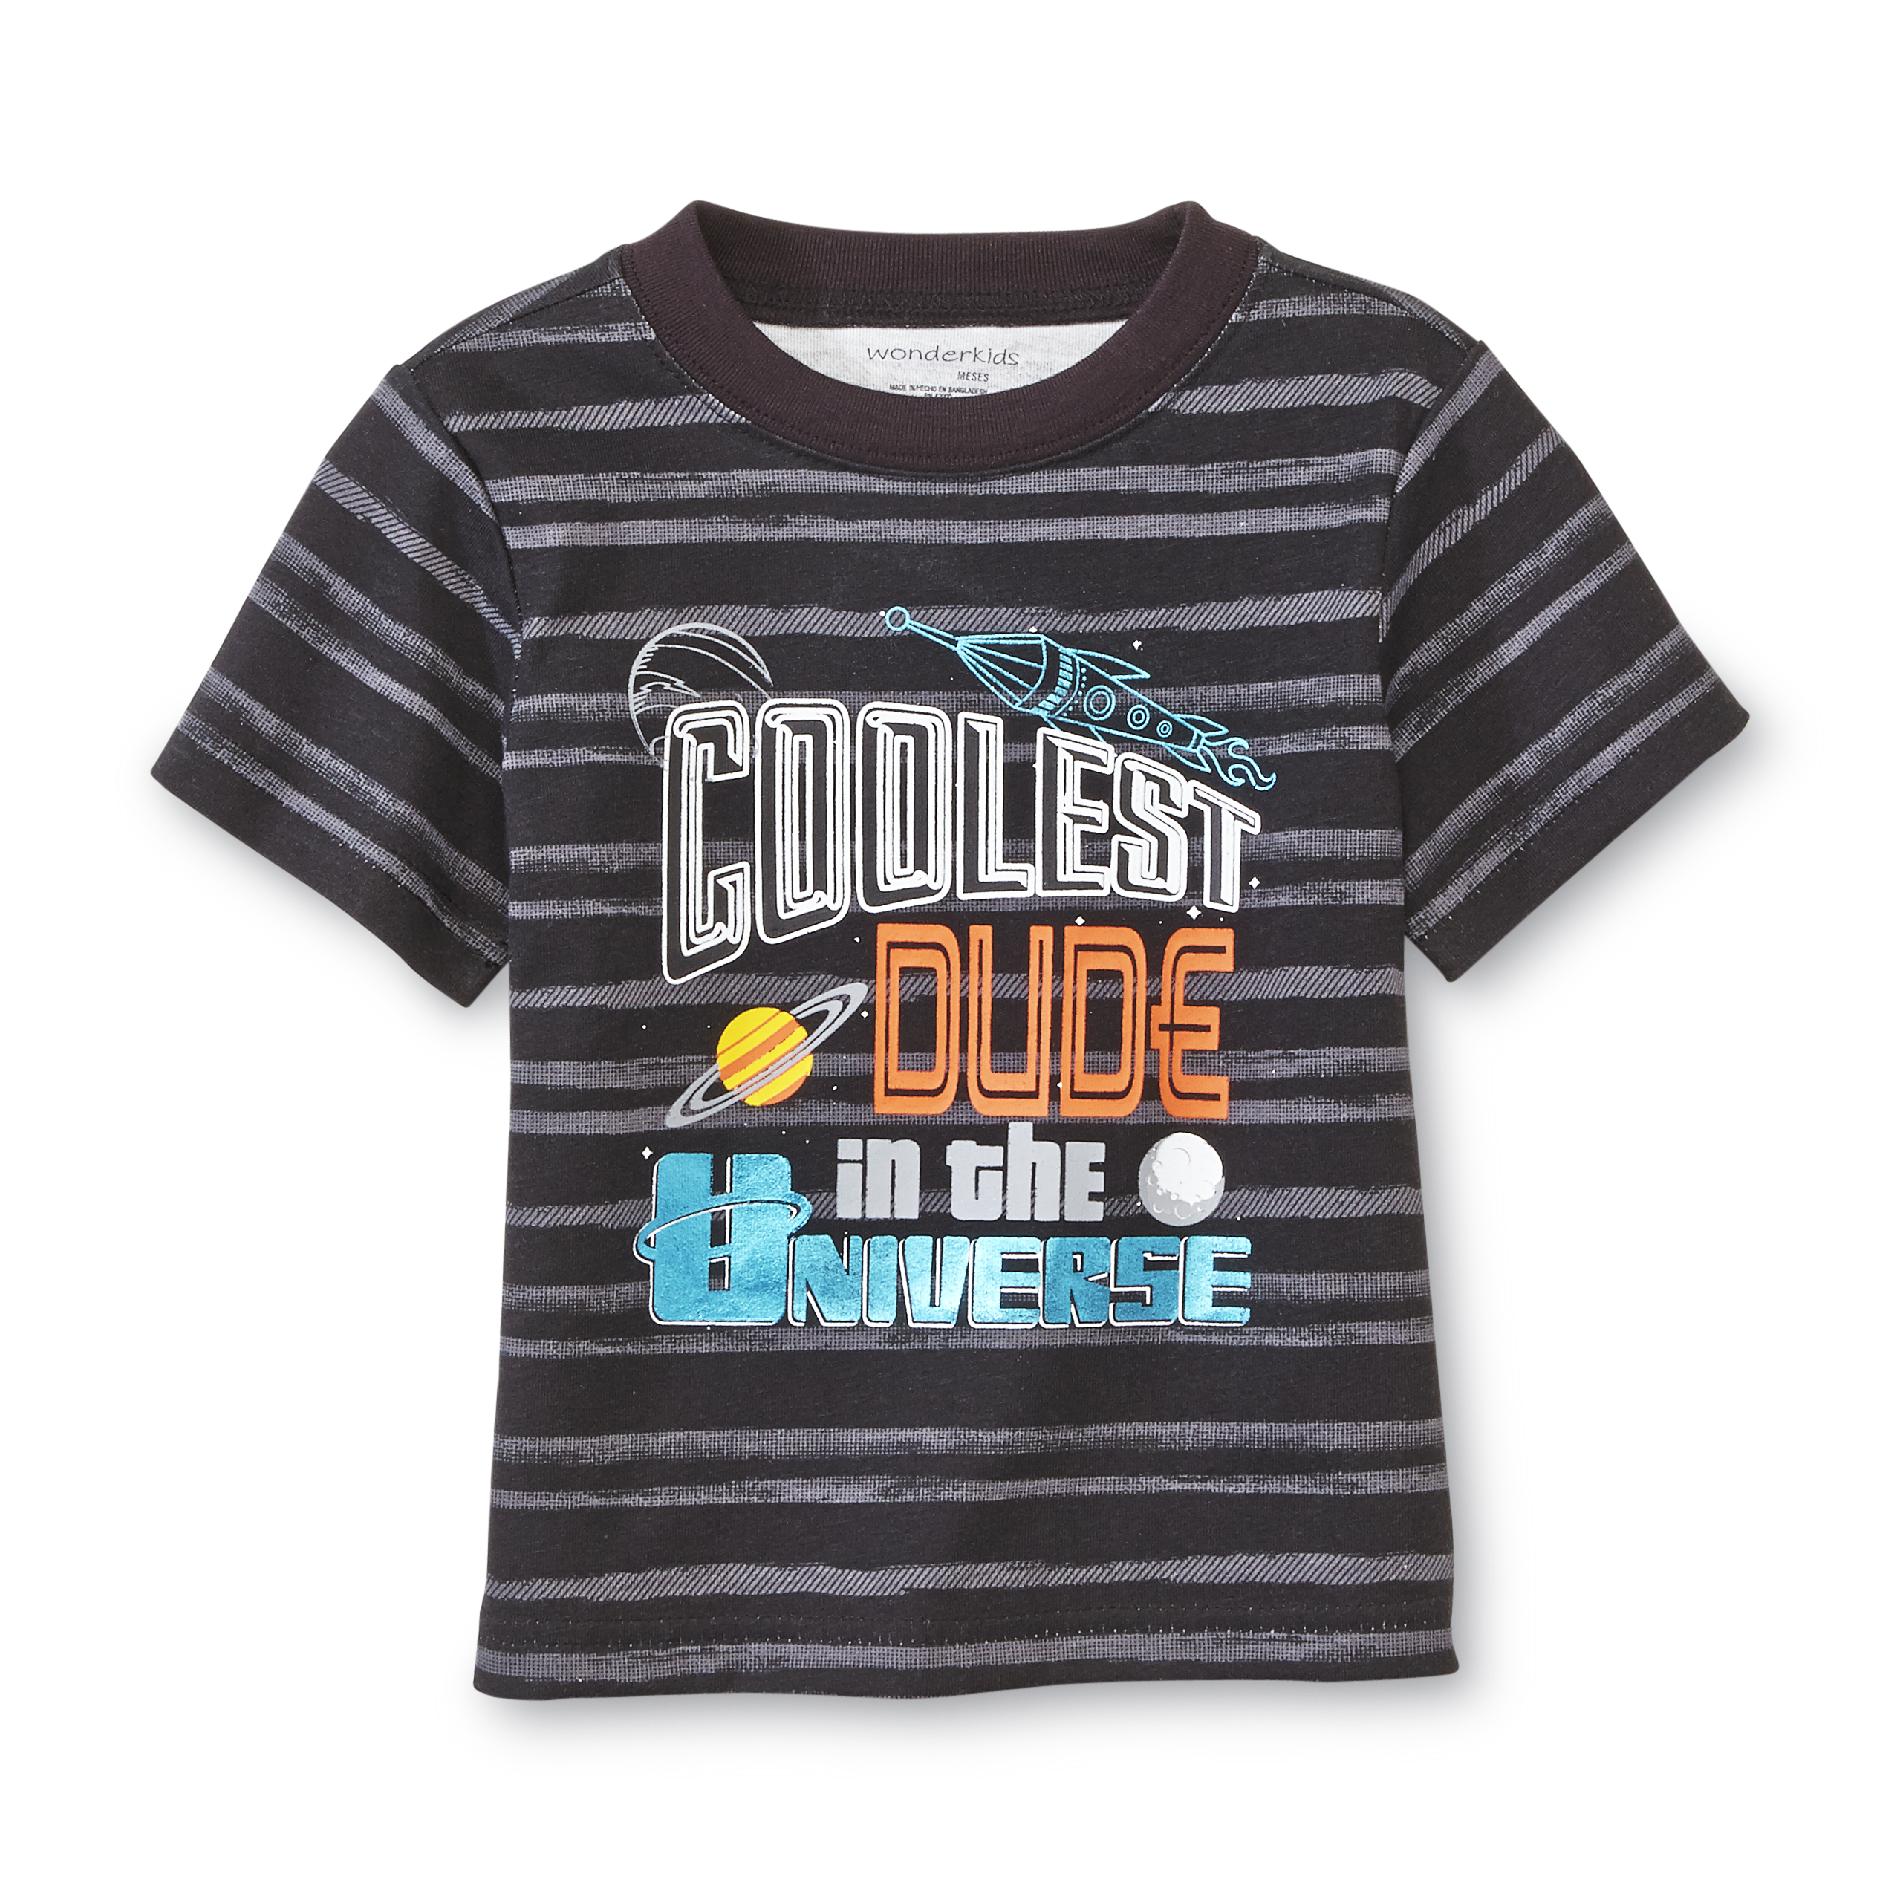 WonderKids Infant & Toddler Boy's Graphic T-Shirt - Coolest Dude